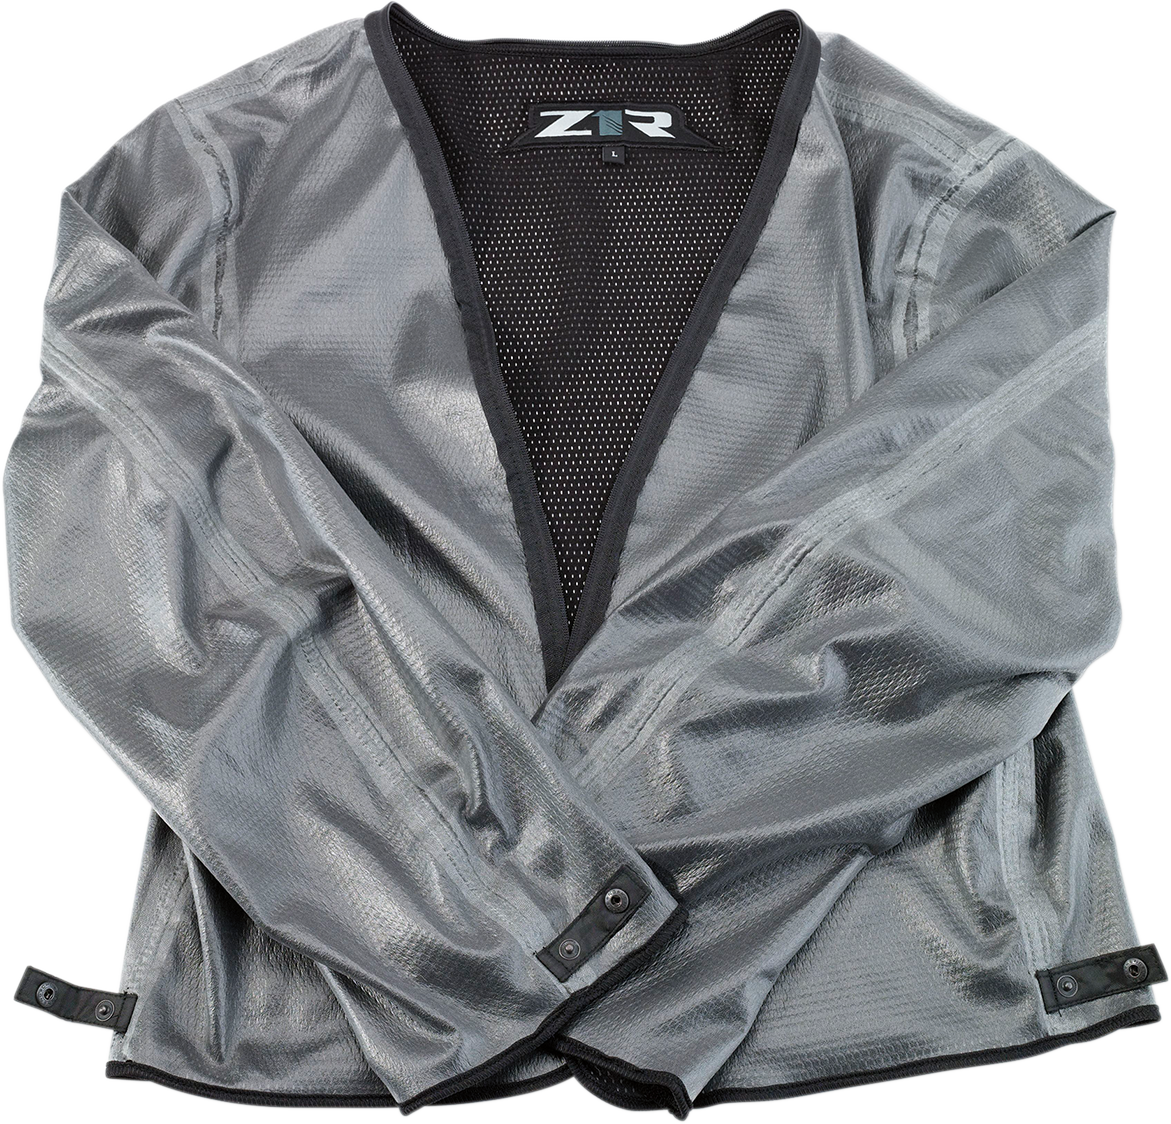 Z1R Gust Mesh Waterproof Jacket - Black - 3XL 2820-4946